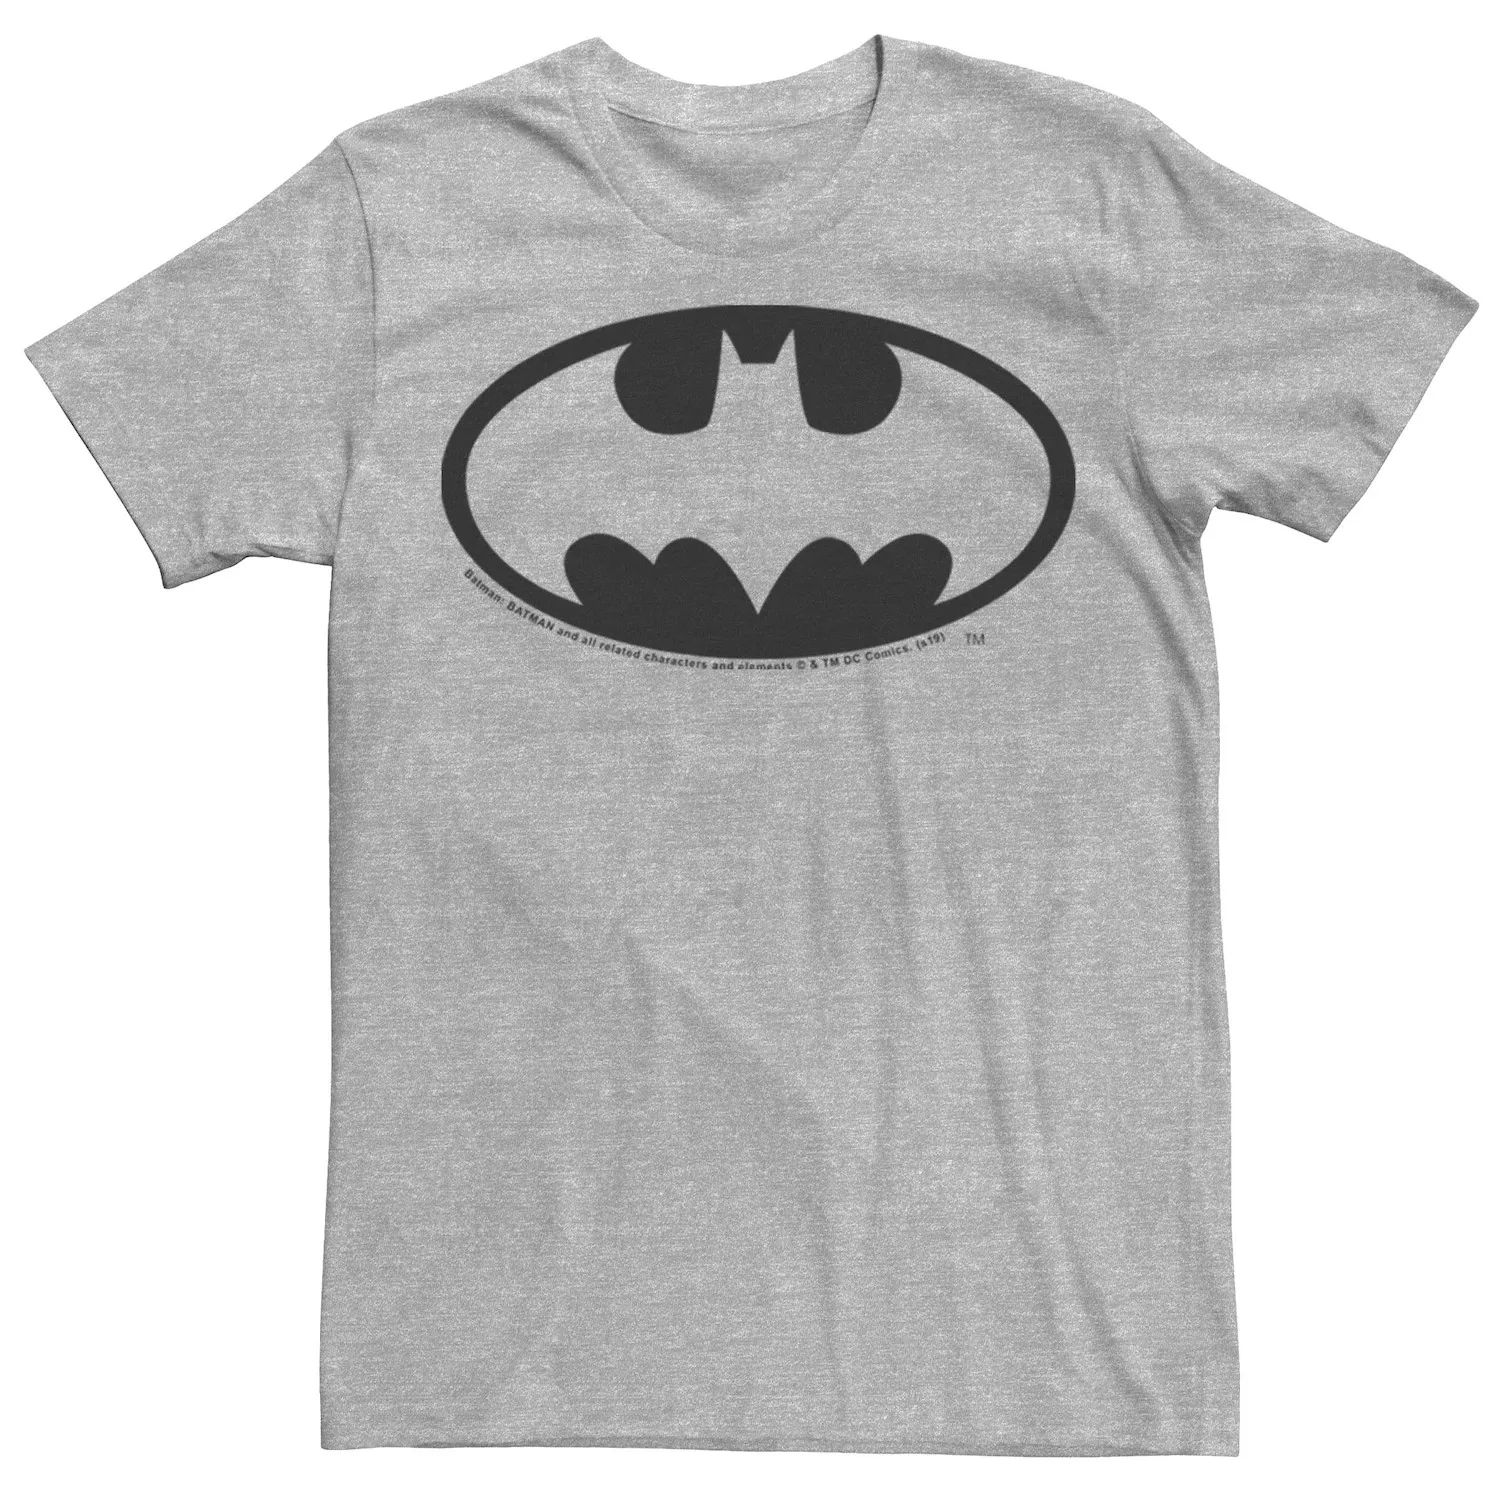 Мужская футболка с логотипом на груди и изображением Бэтмена DC Comics